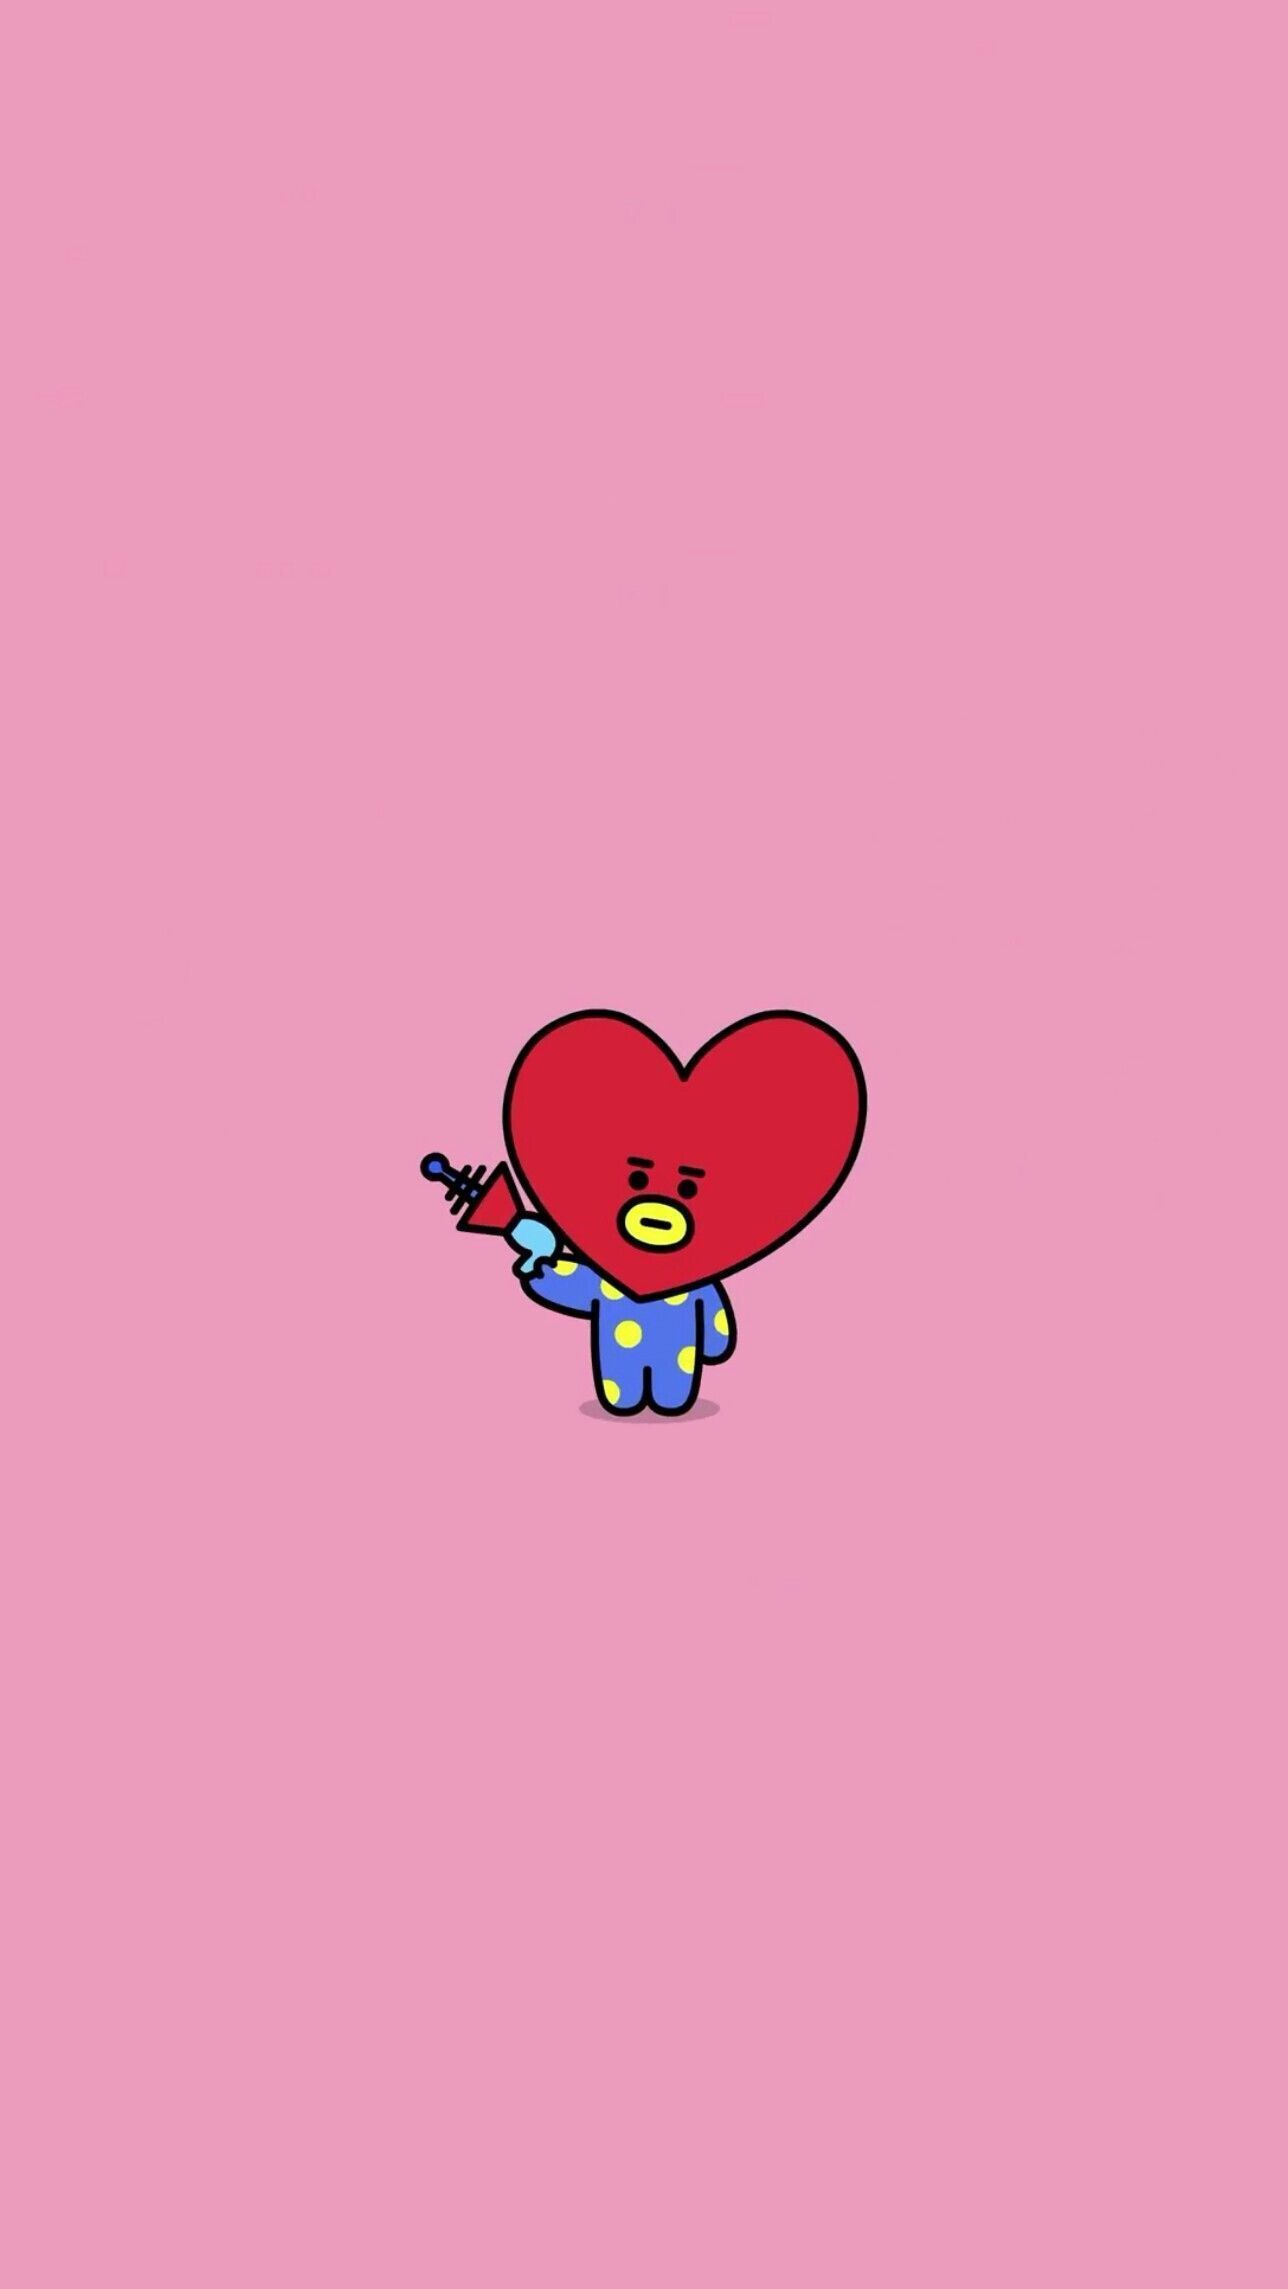 A cute little cartoon character with heart shaped head - BT21